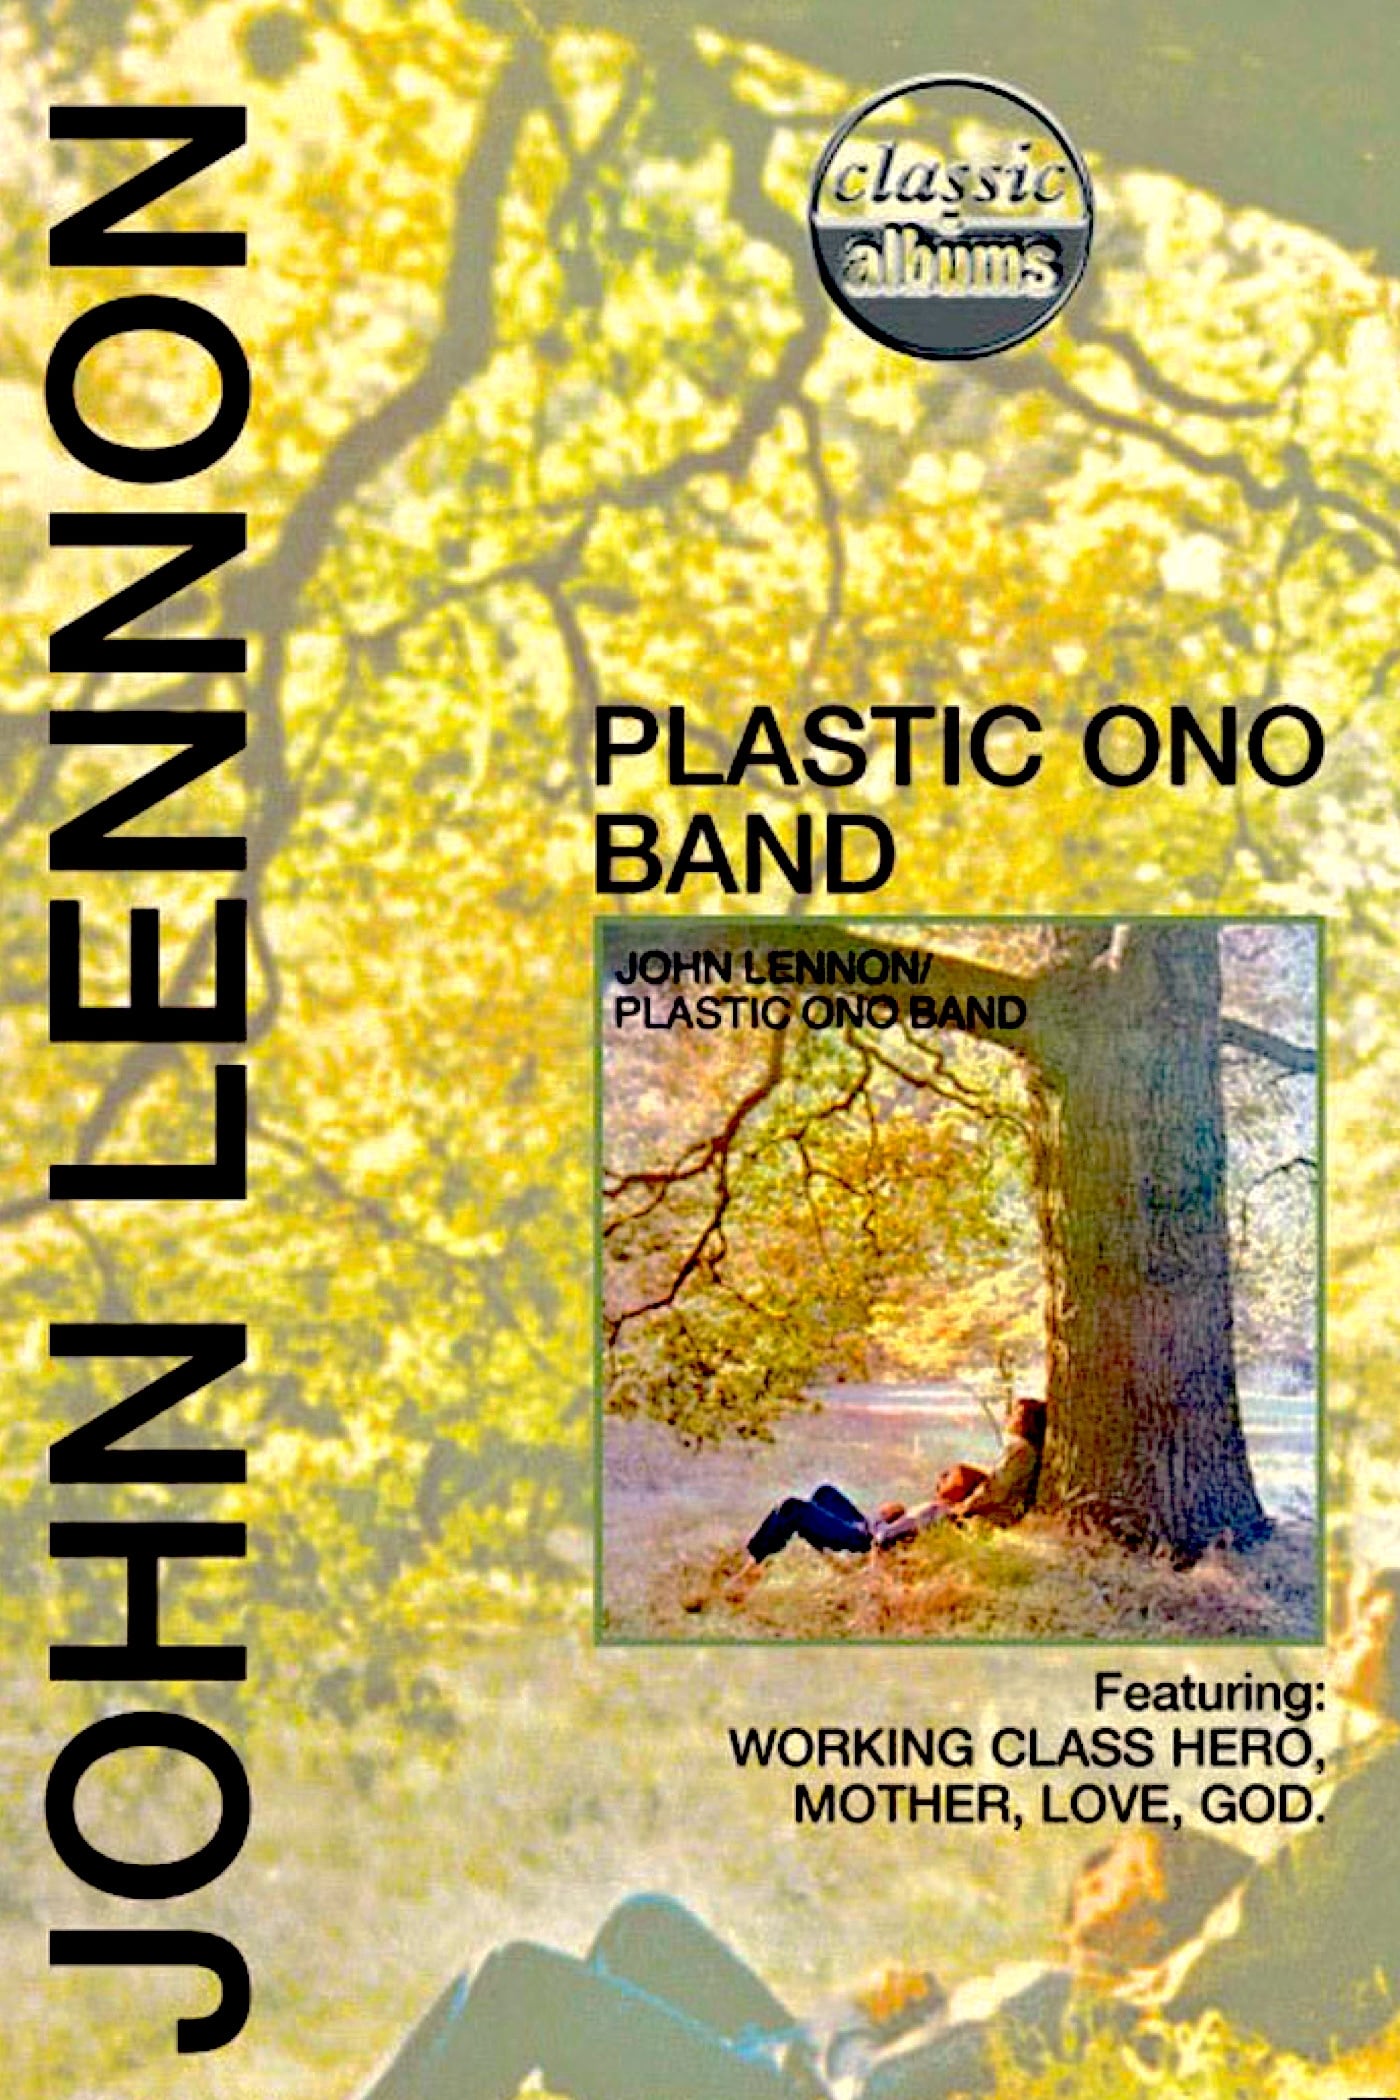 Classic Albums: John Lennon - Plastic Ono Band